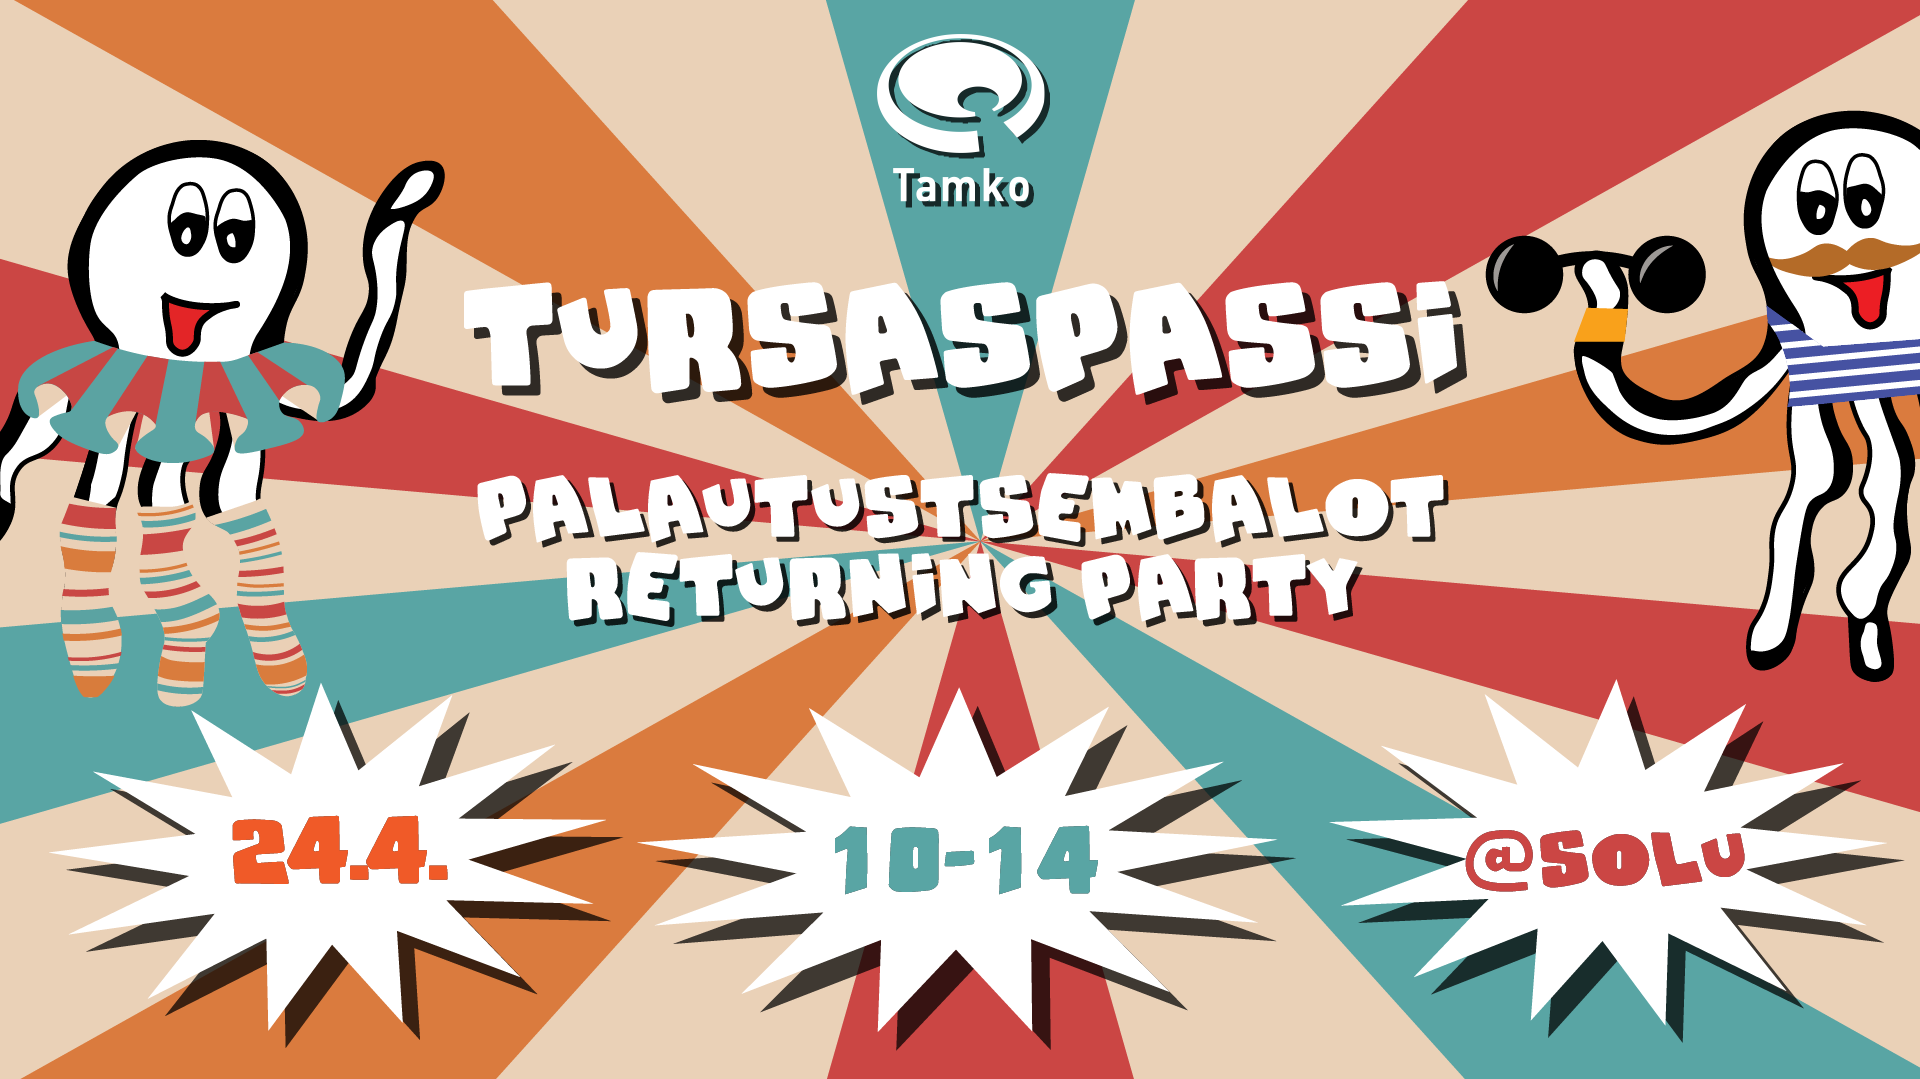 Tursaspassi returning party